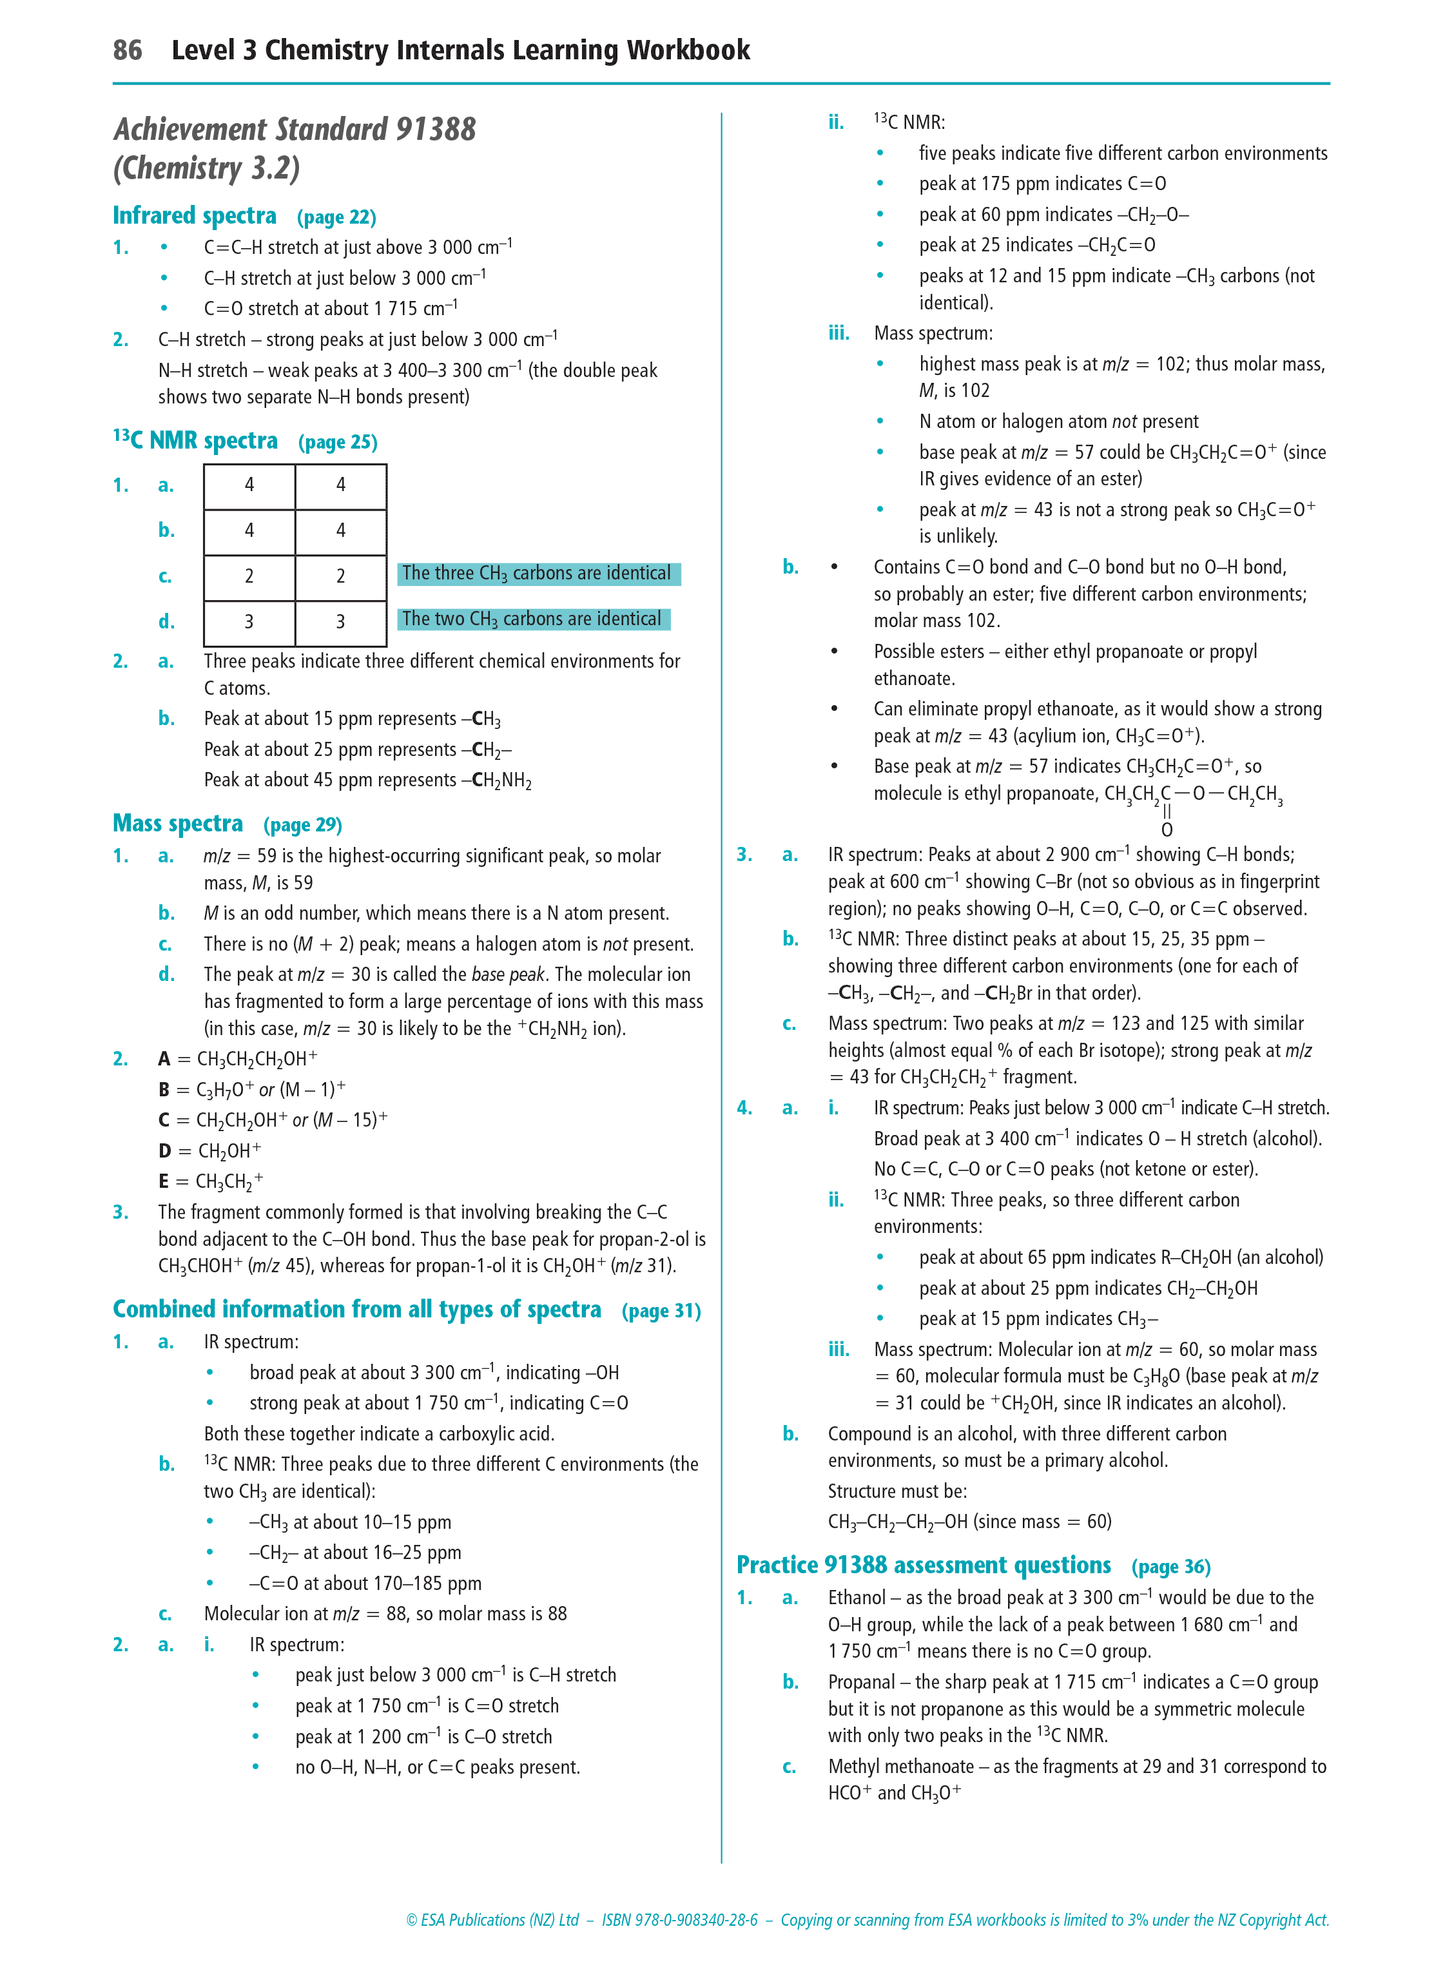 Level 3 Chemistry Internals Learning Workbook